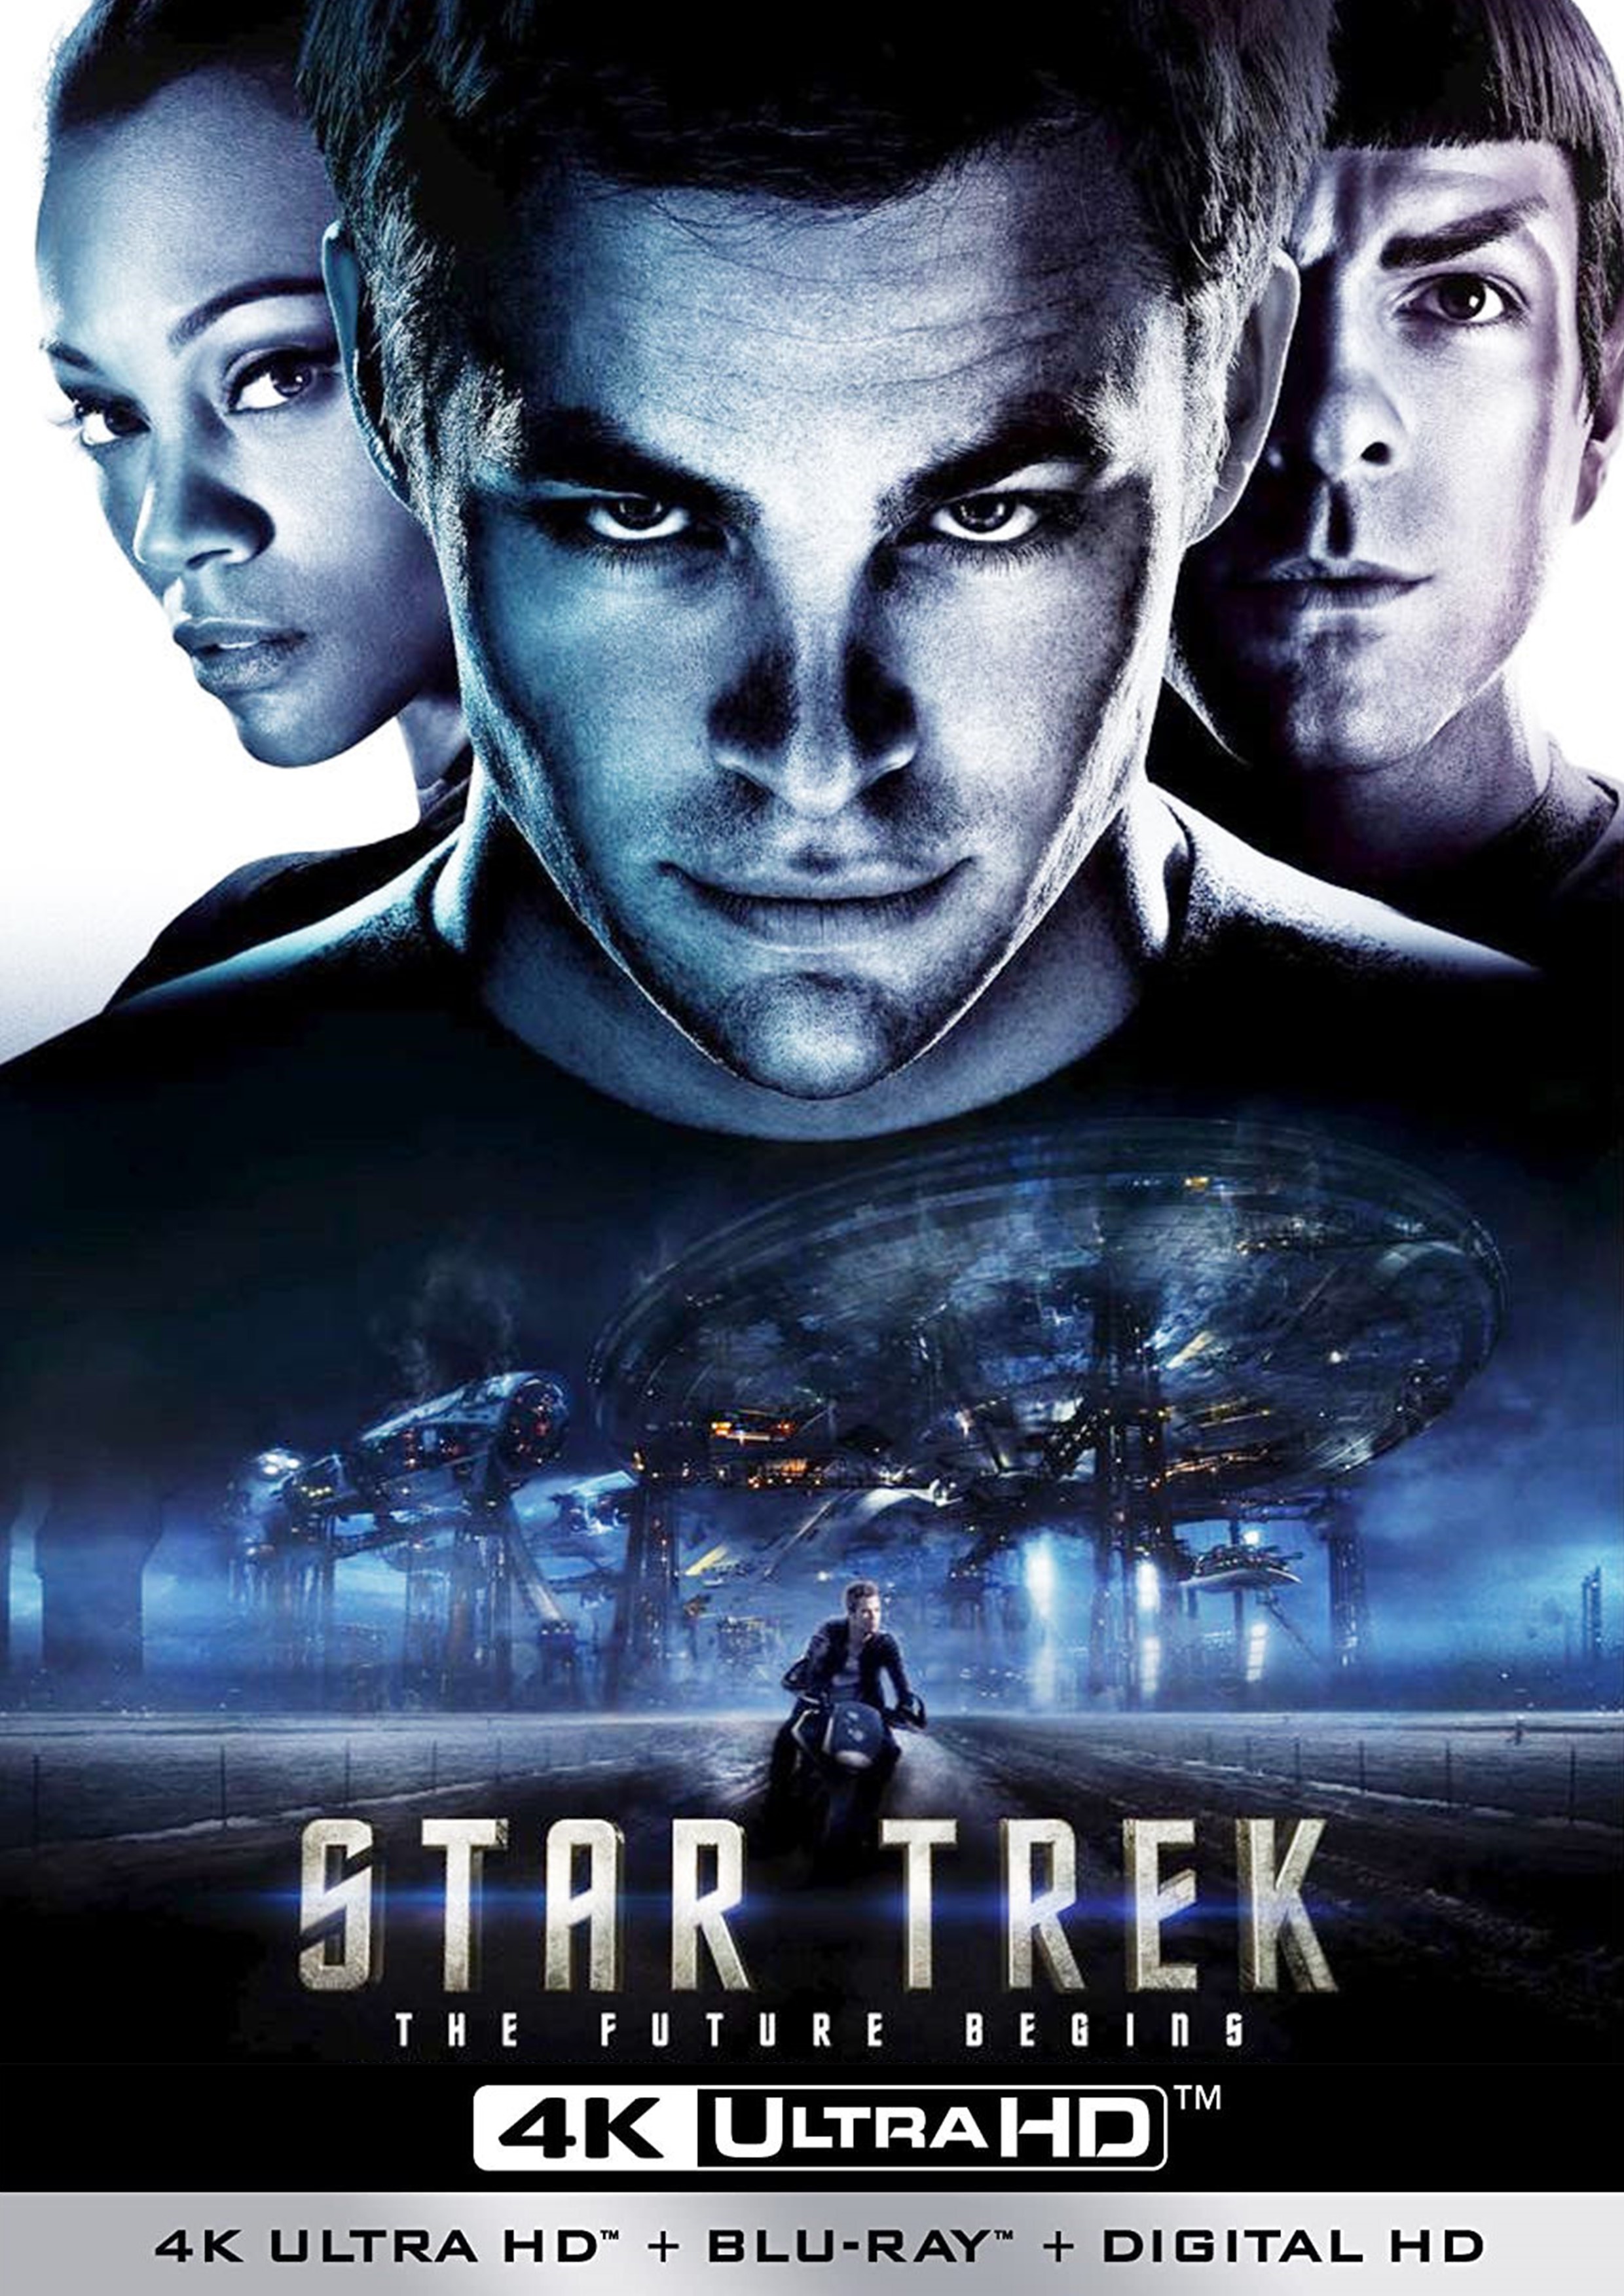 Stiahni si UHD Filmy Star Trek (2009)(CZ/EN)(2160p 4K BRRip) = CSFD 84%